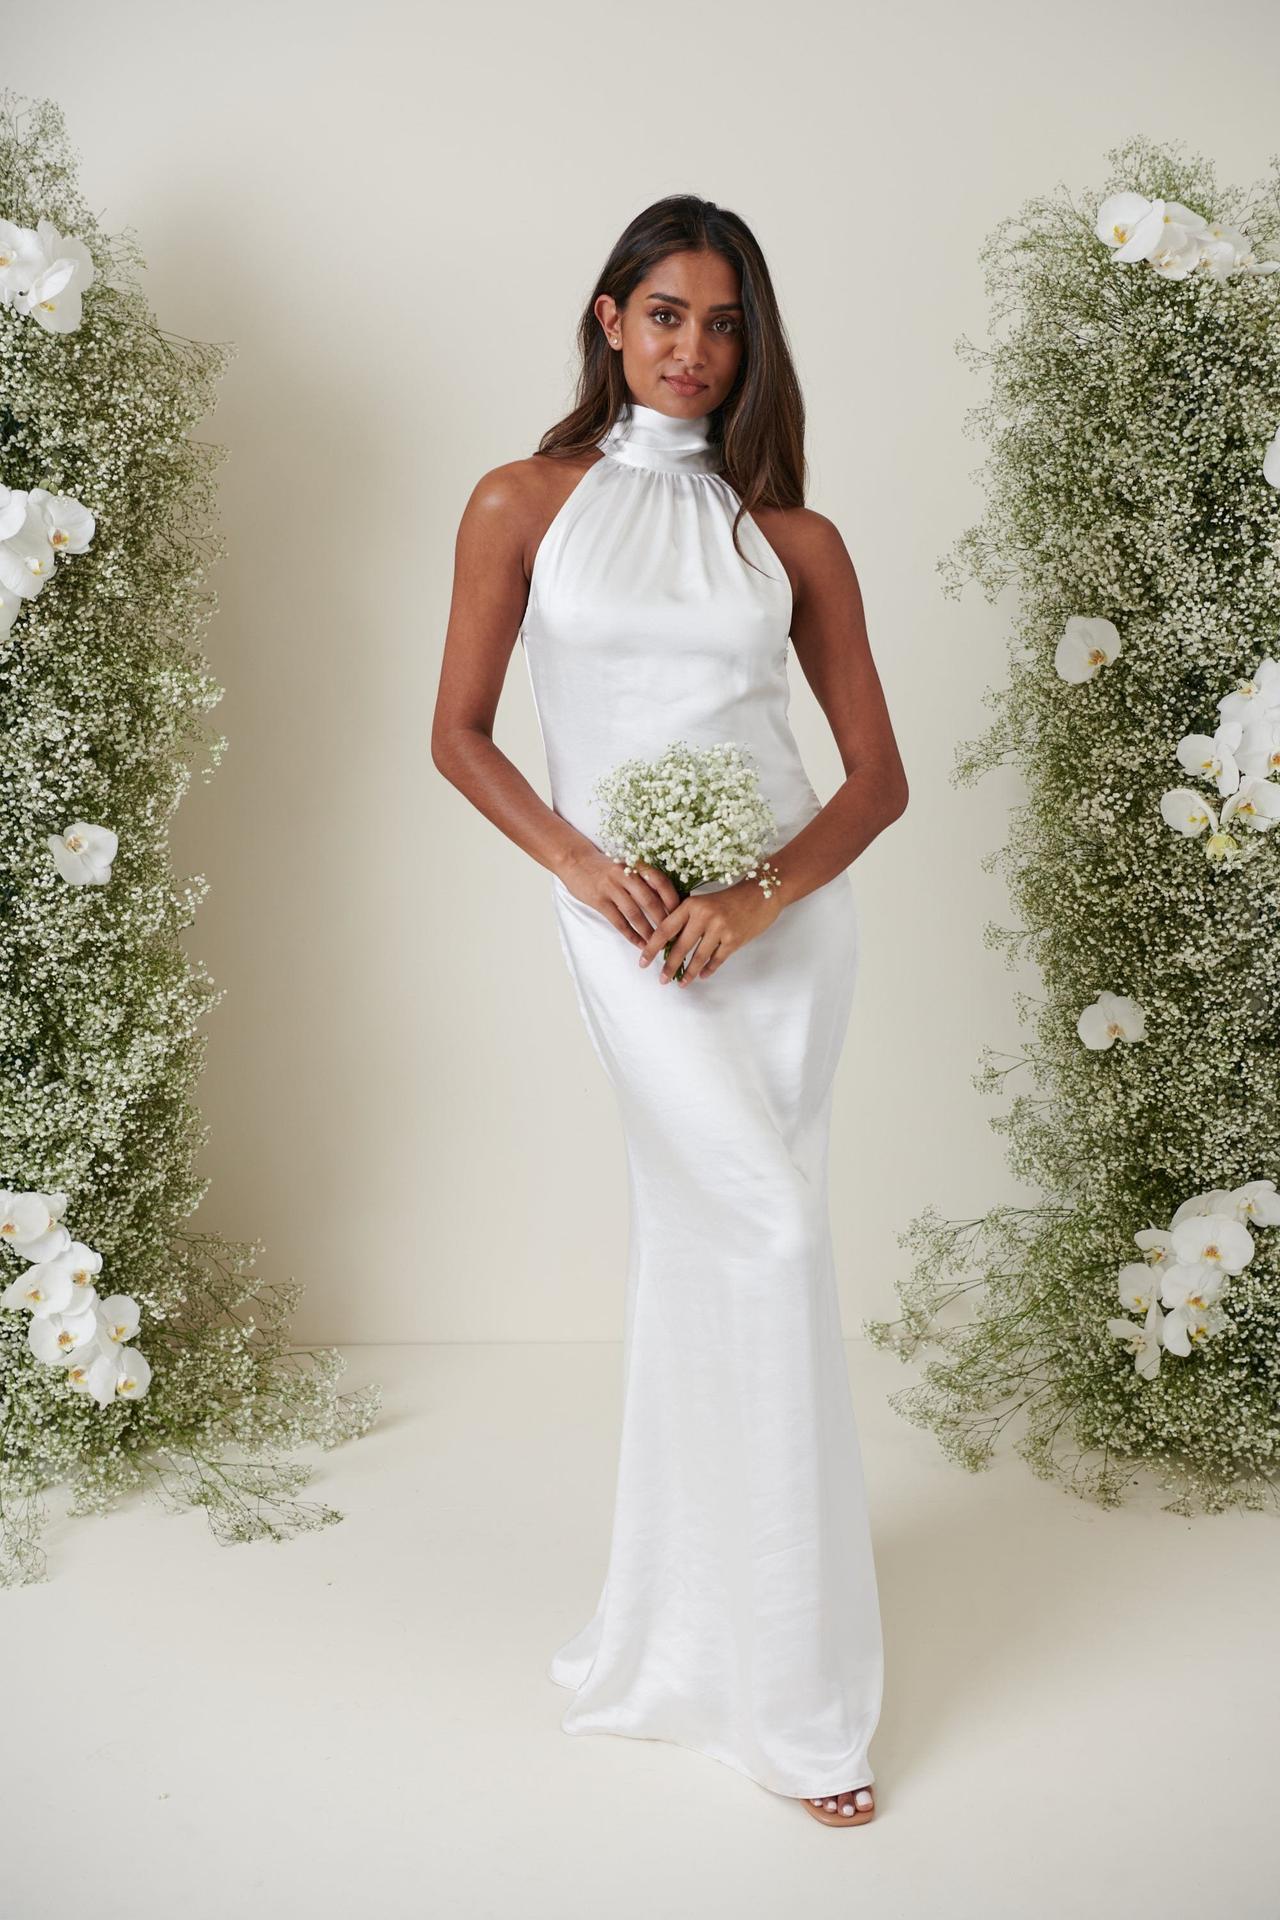 Satin Wedding Dresses: 25 Swoon-Worthy Designs 